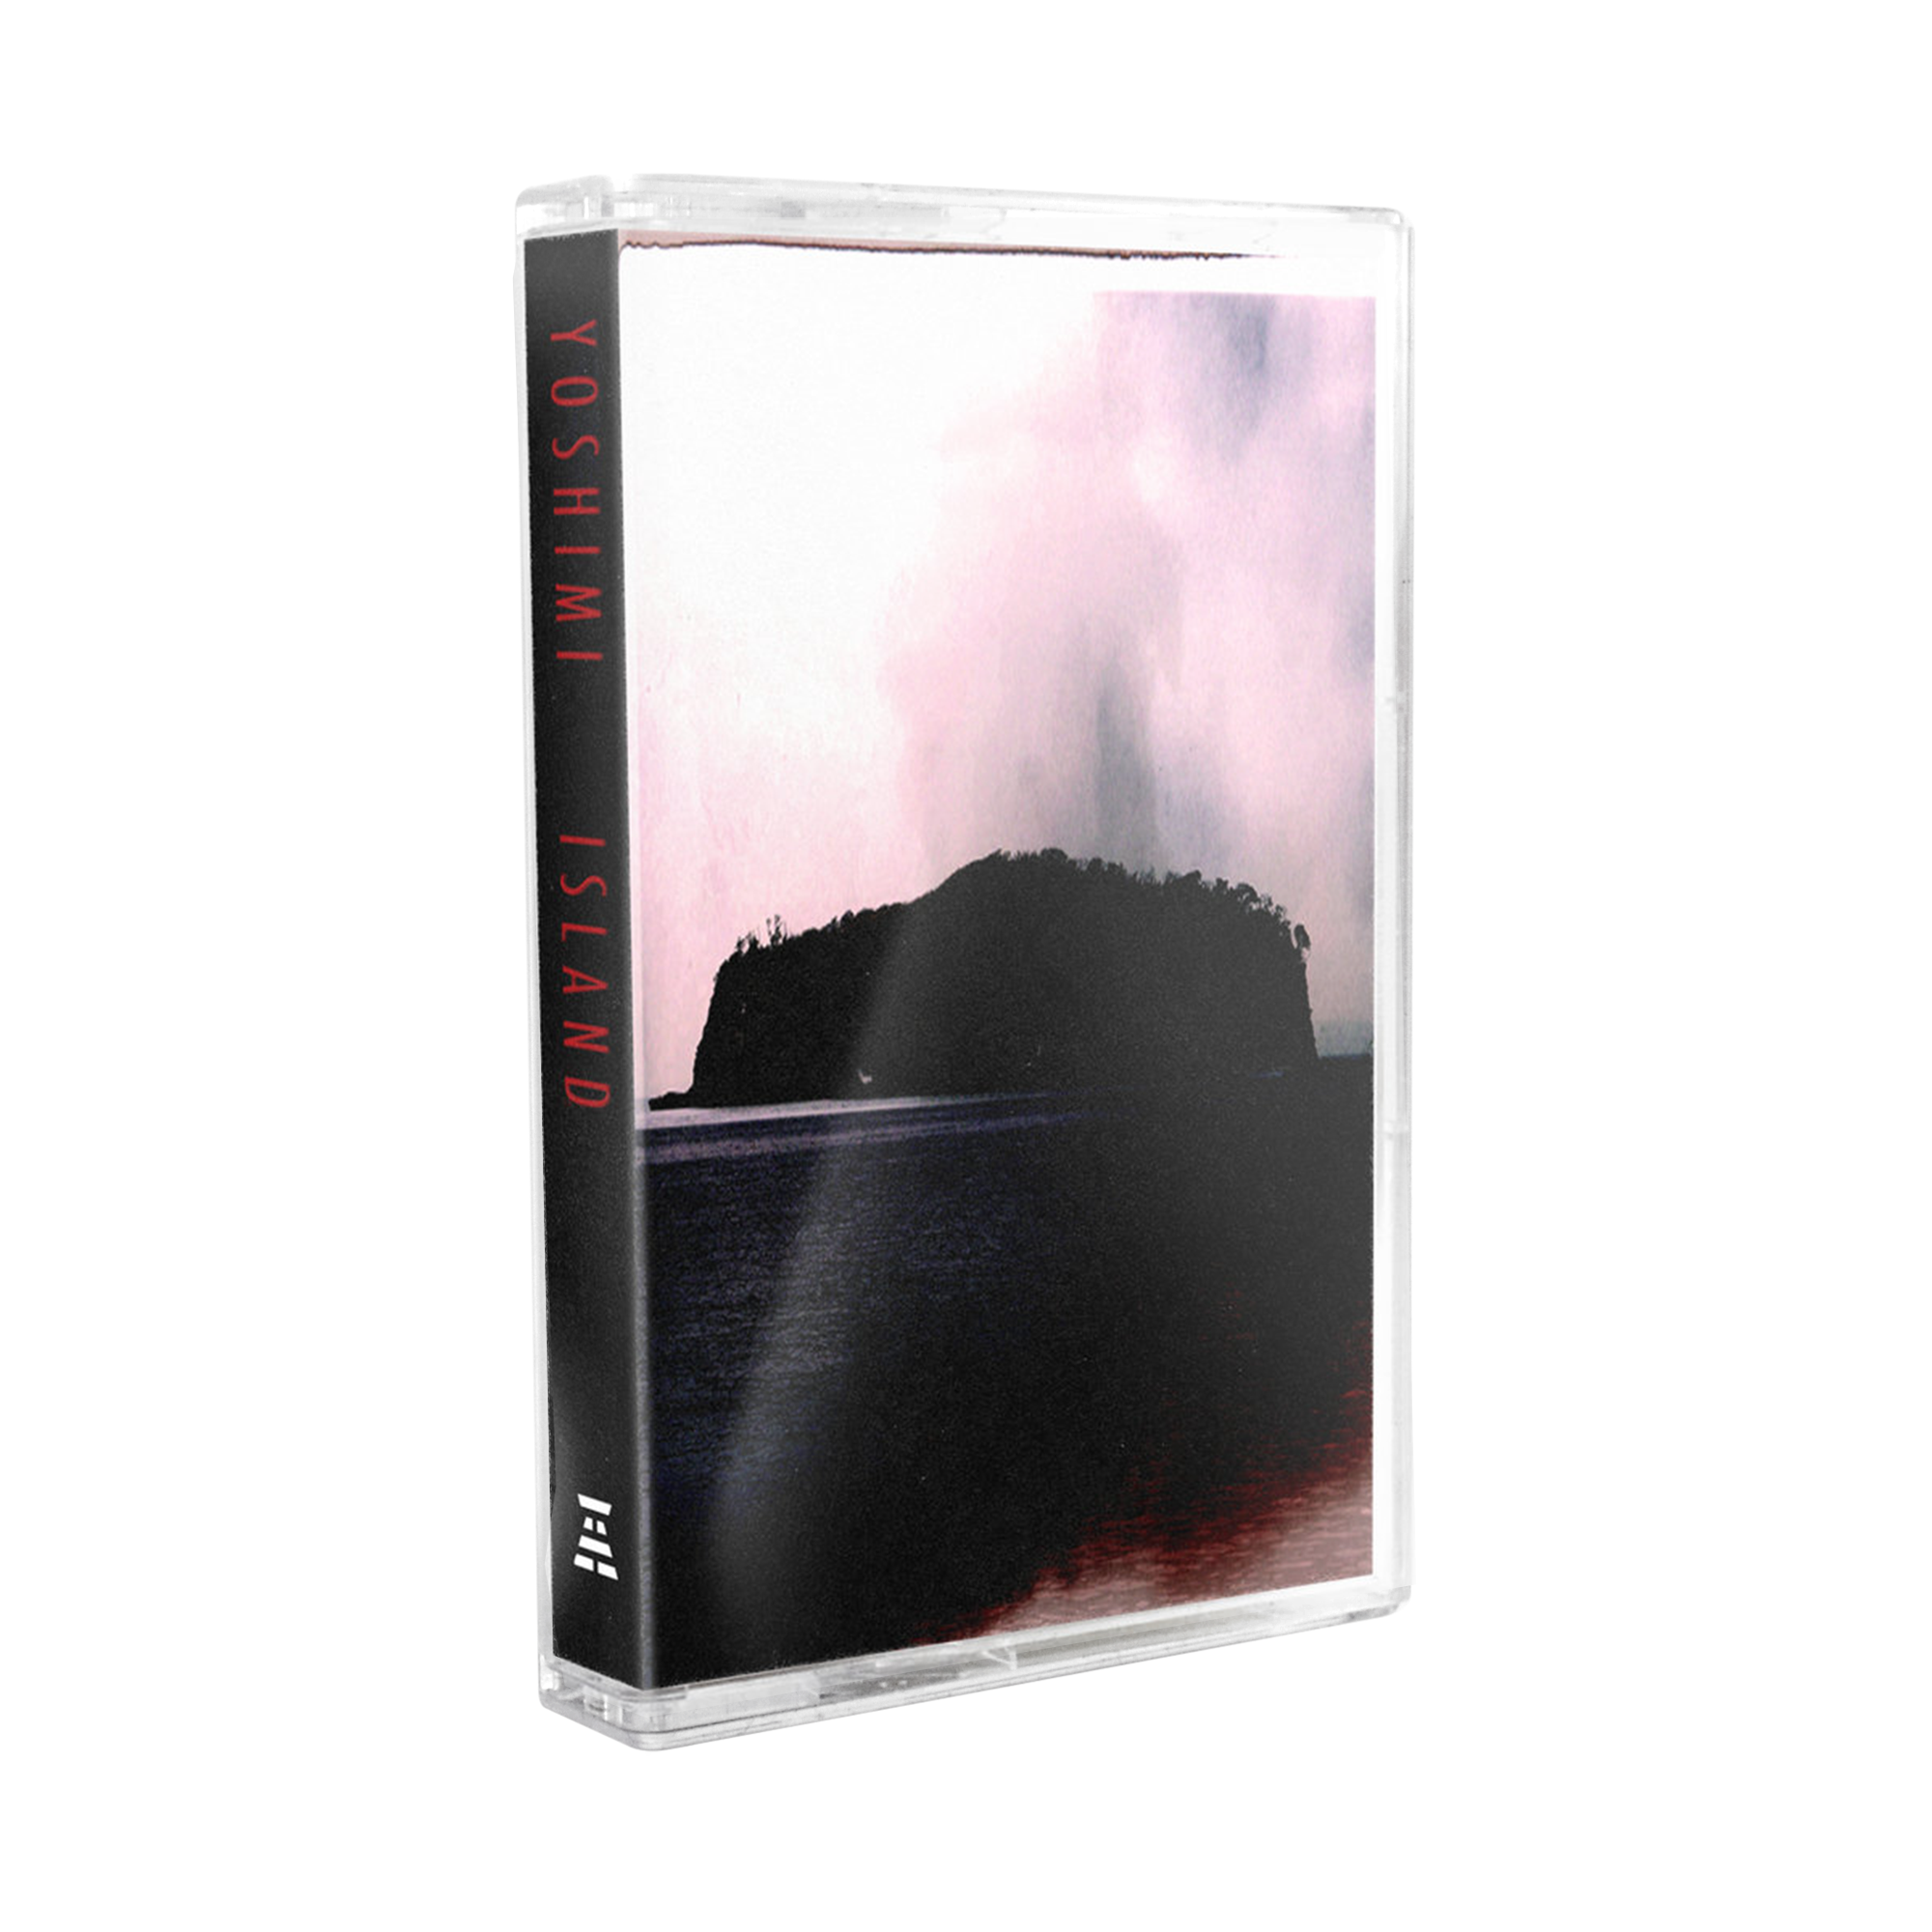 Yoshimi - 'Island' [Cassette]